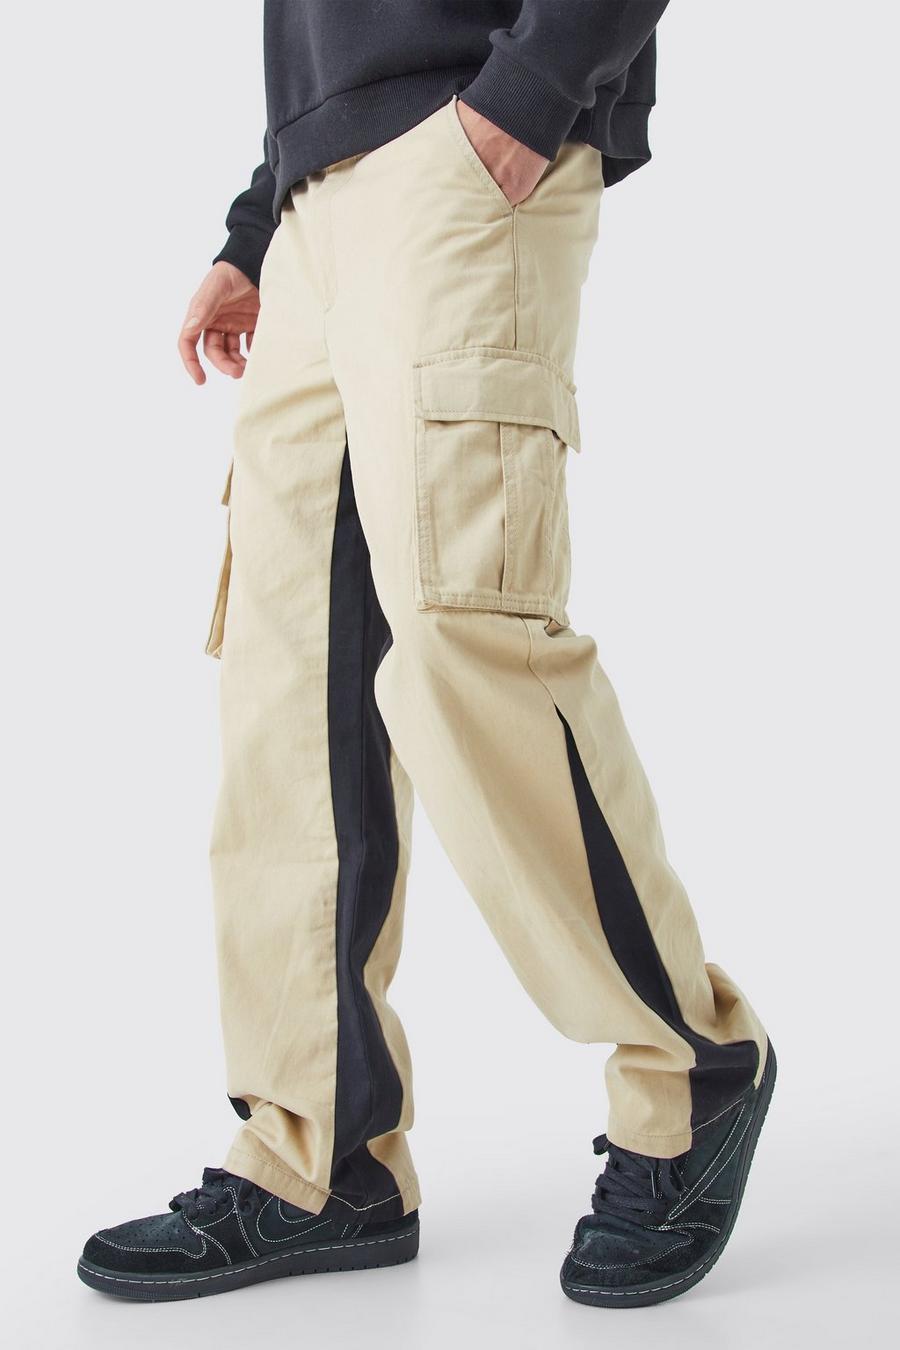 Men's Pants, Trousers & Slacks for Men